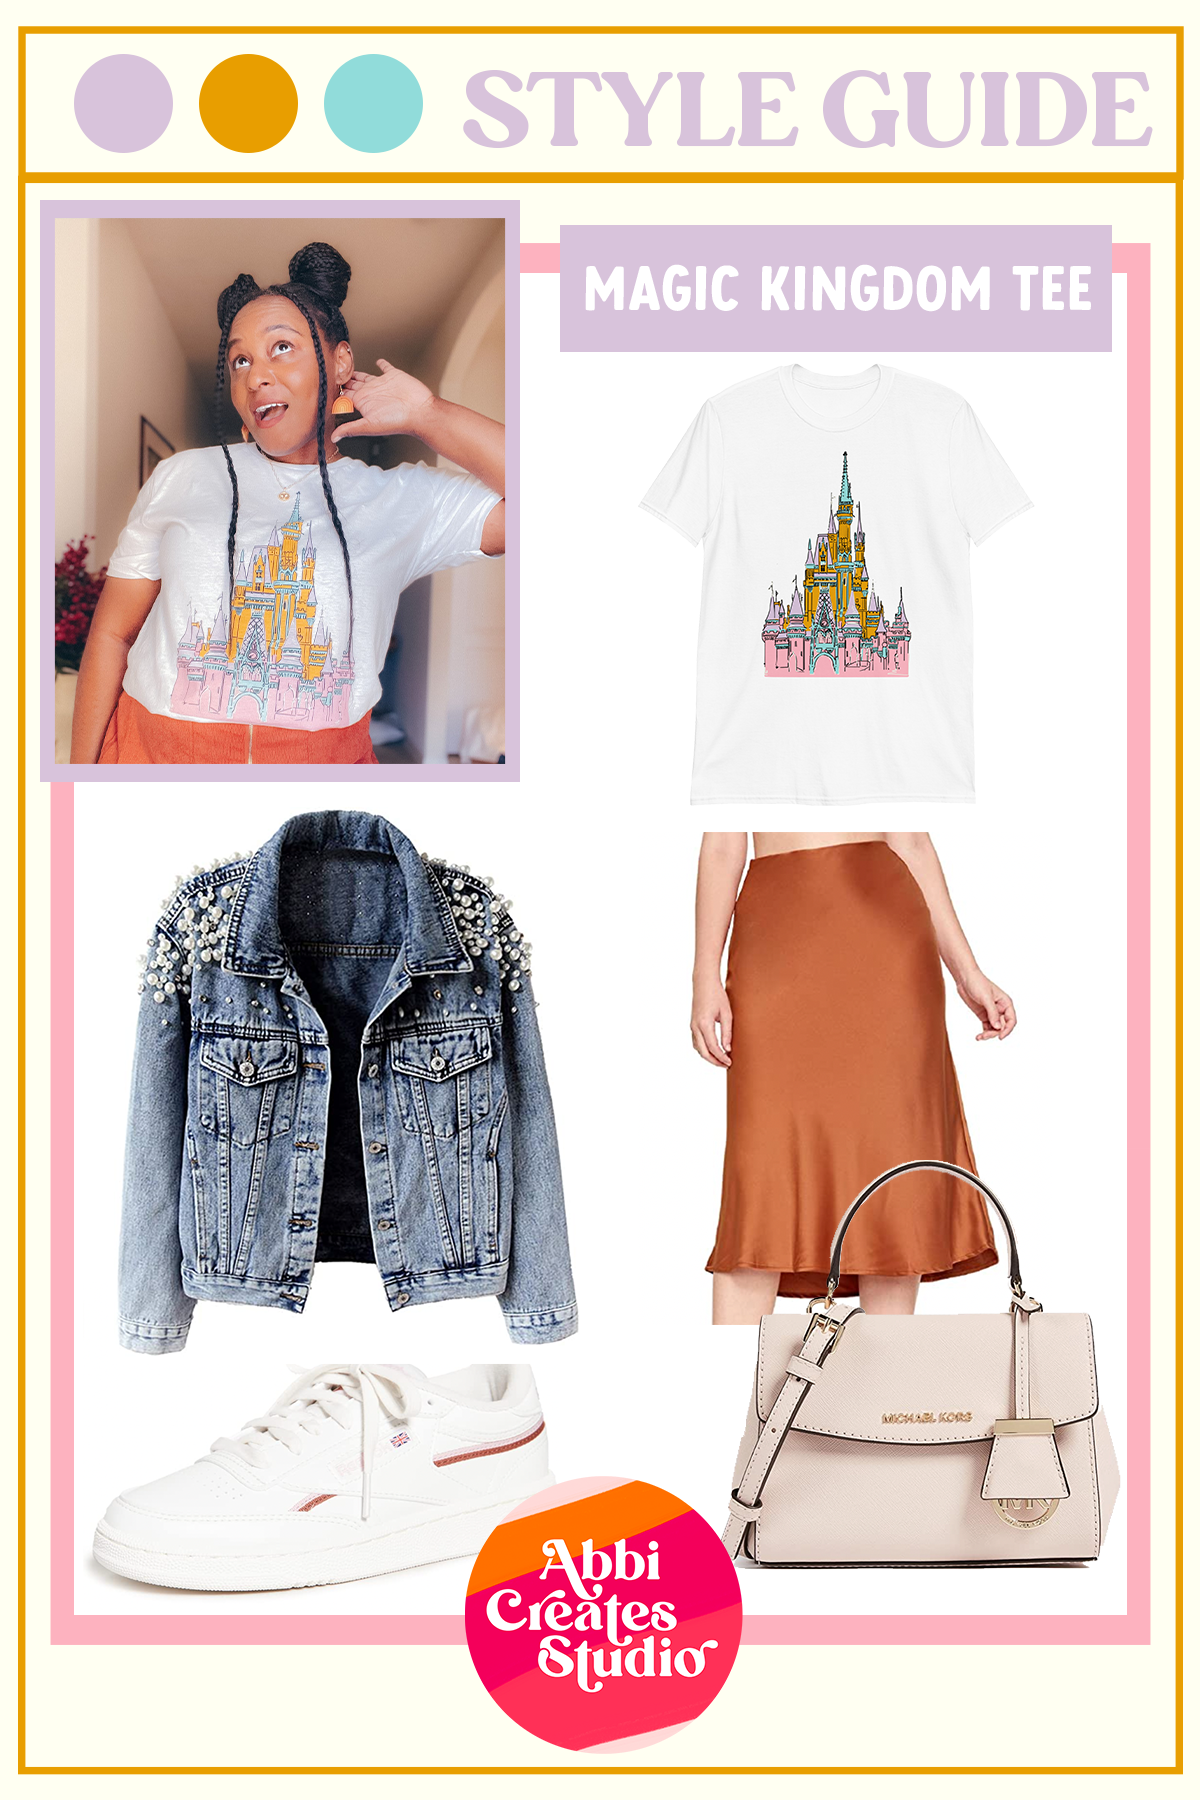 How to Style our Magic Kingdom Disney Inspired T-shirt | Styleguide Abbicreates Studio 